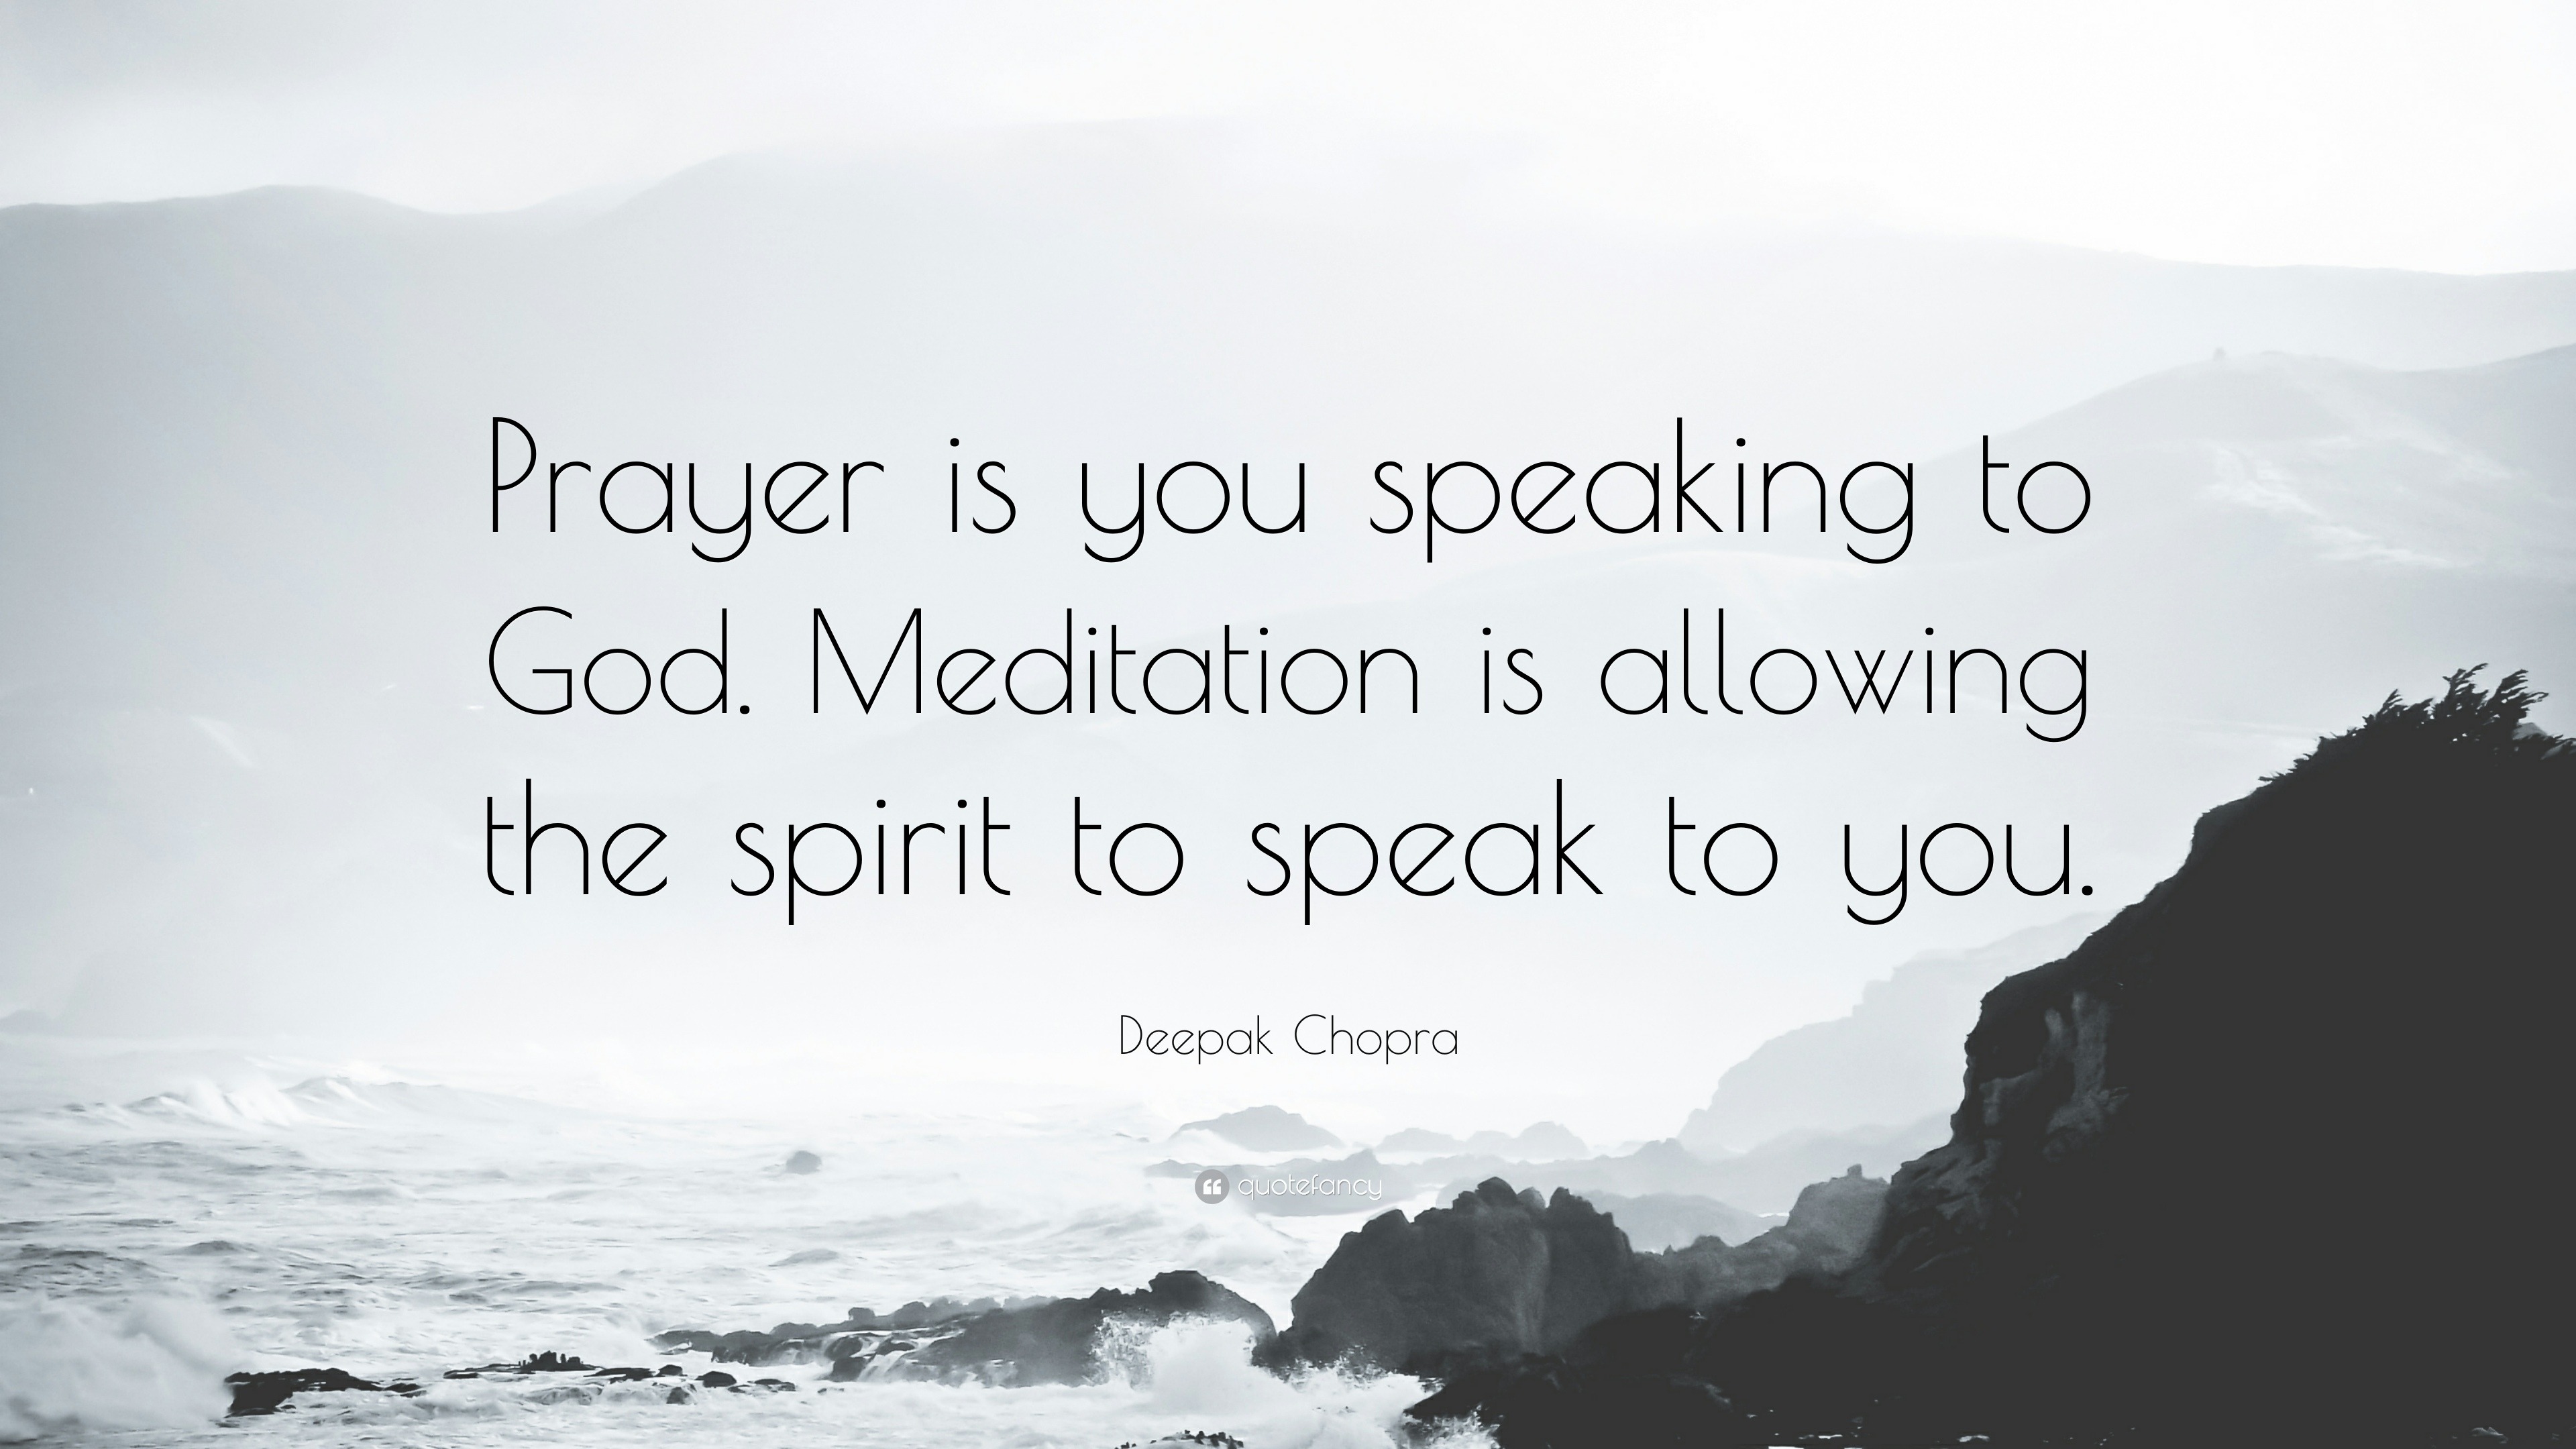 Deepak Chopra Quote: “Prayer is you speaking to God. Meditation is